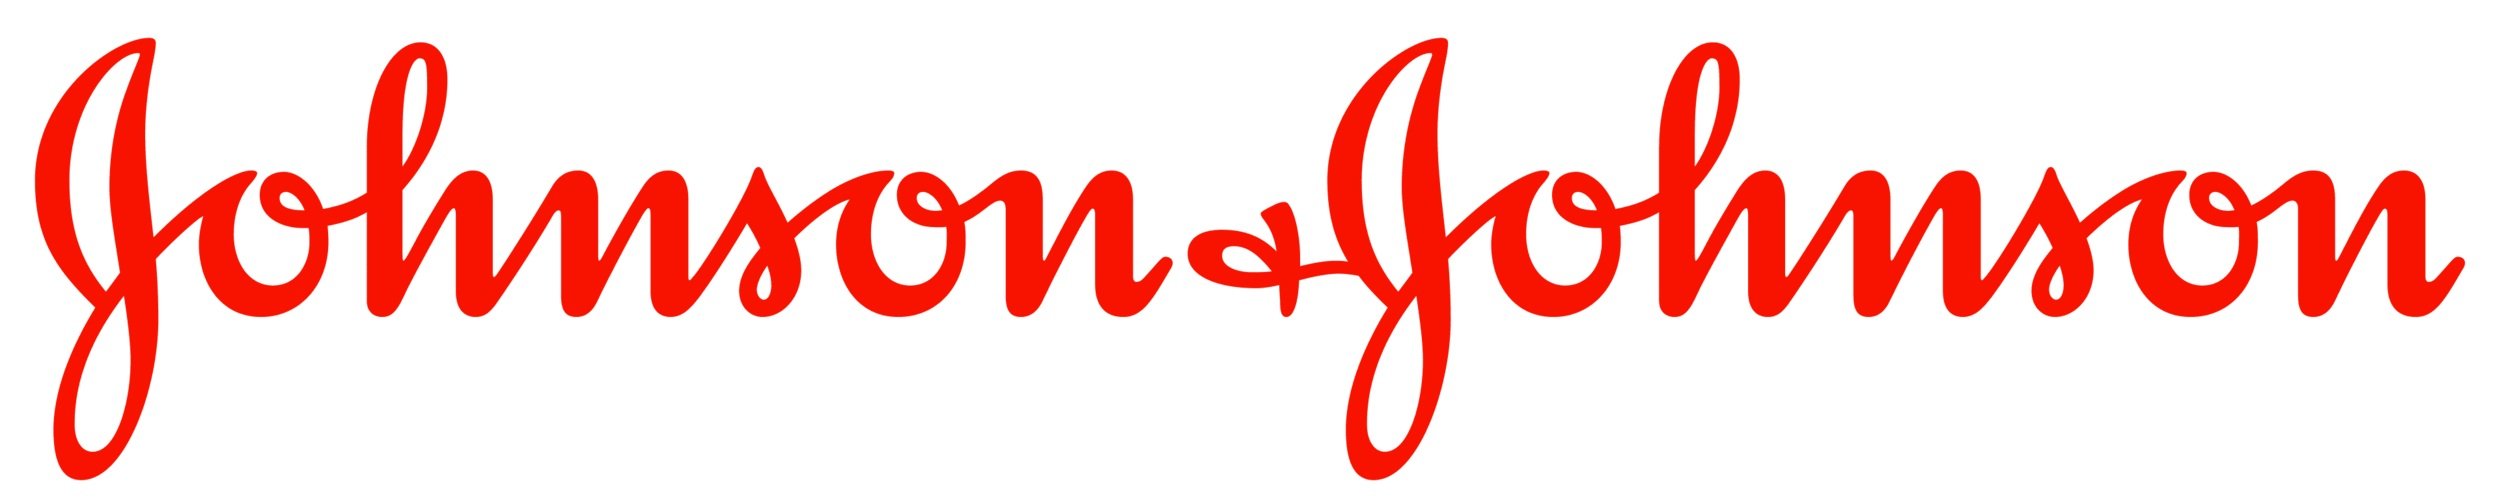 Johnson-Johnson-Logo.jpg